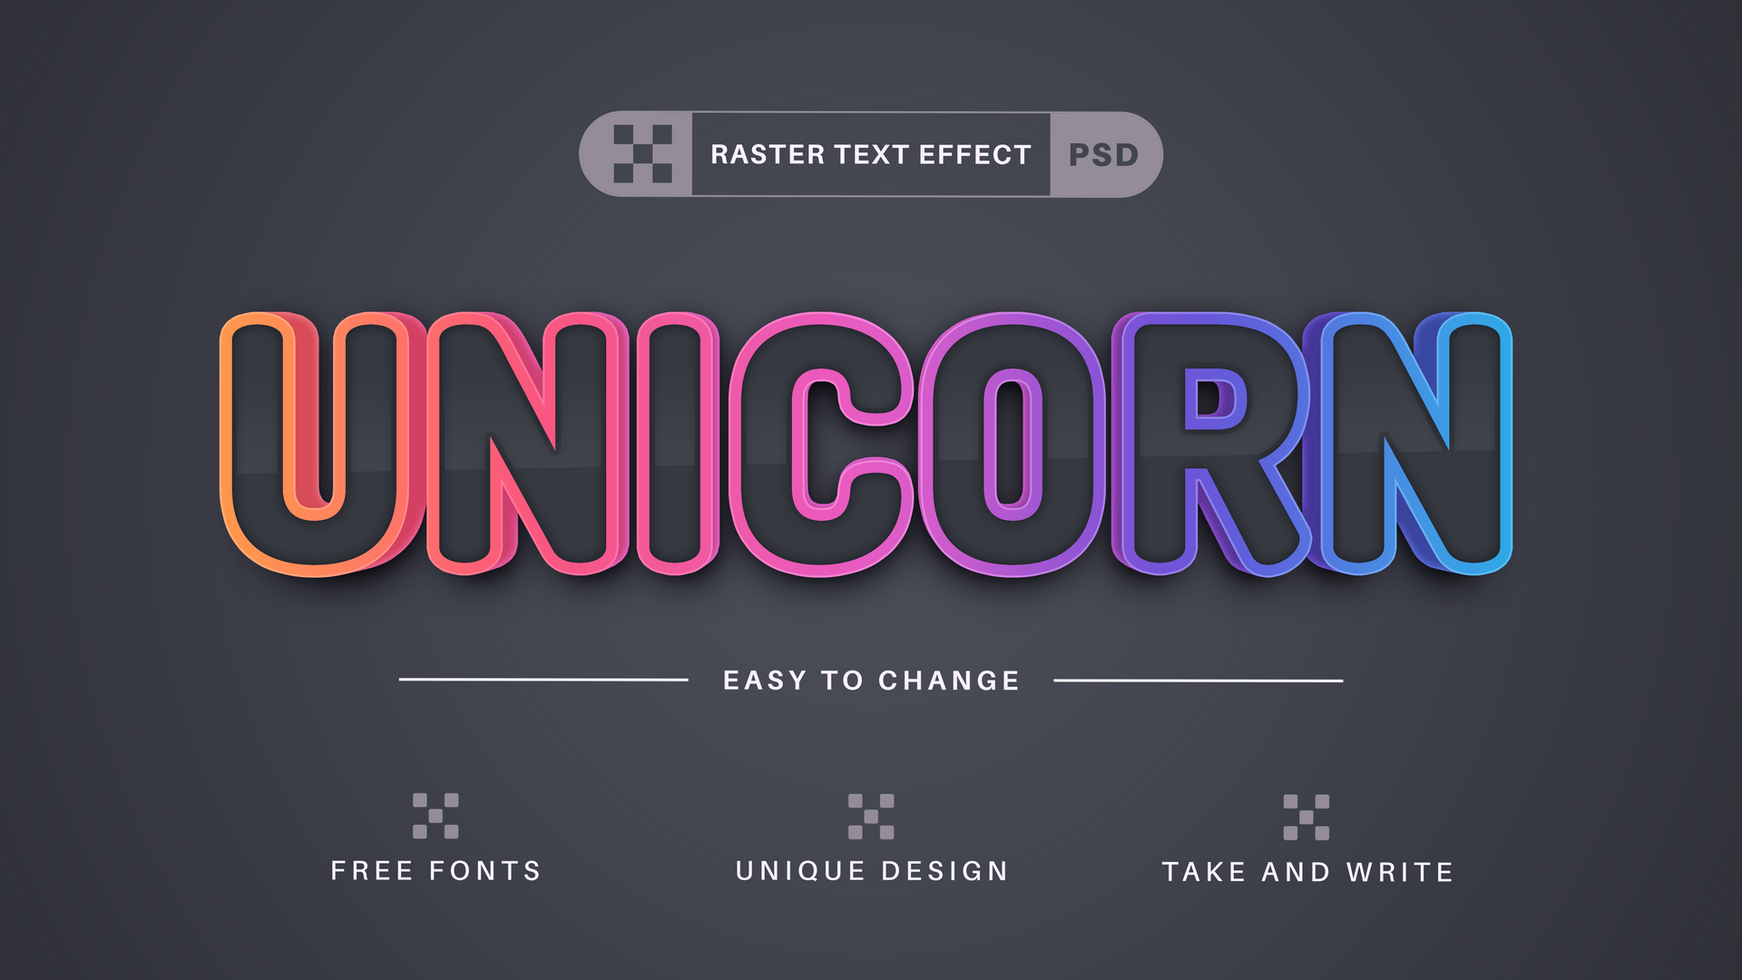 Unicorn - Editable Text Effect, Font Style psd